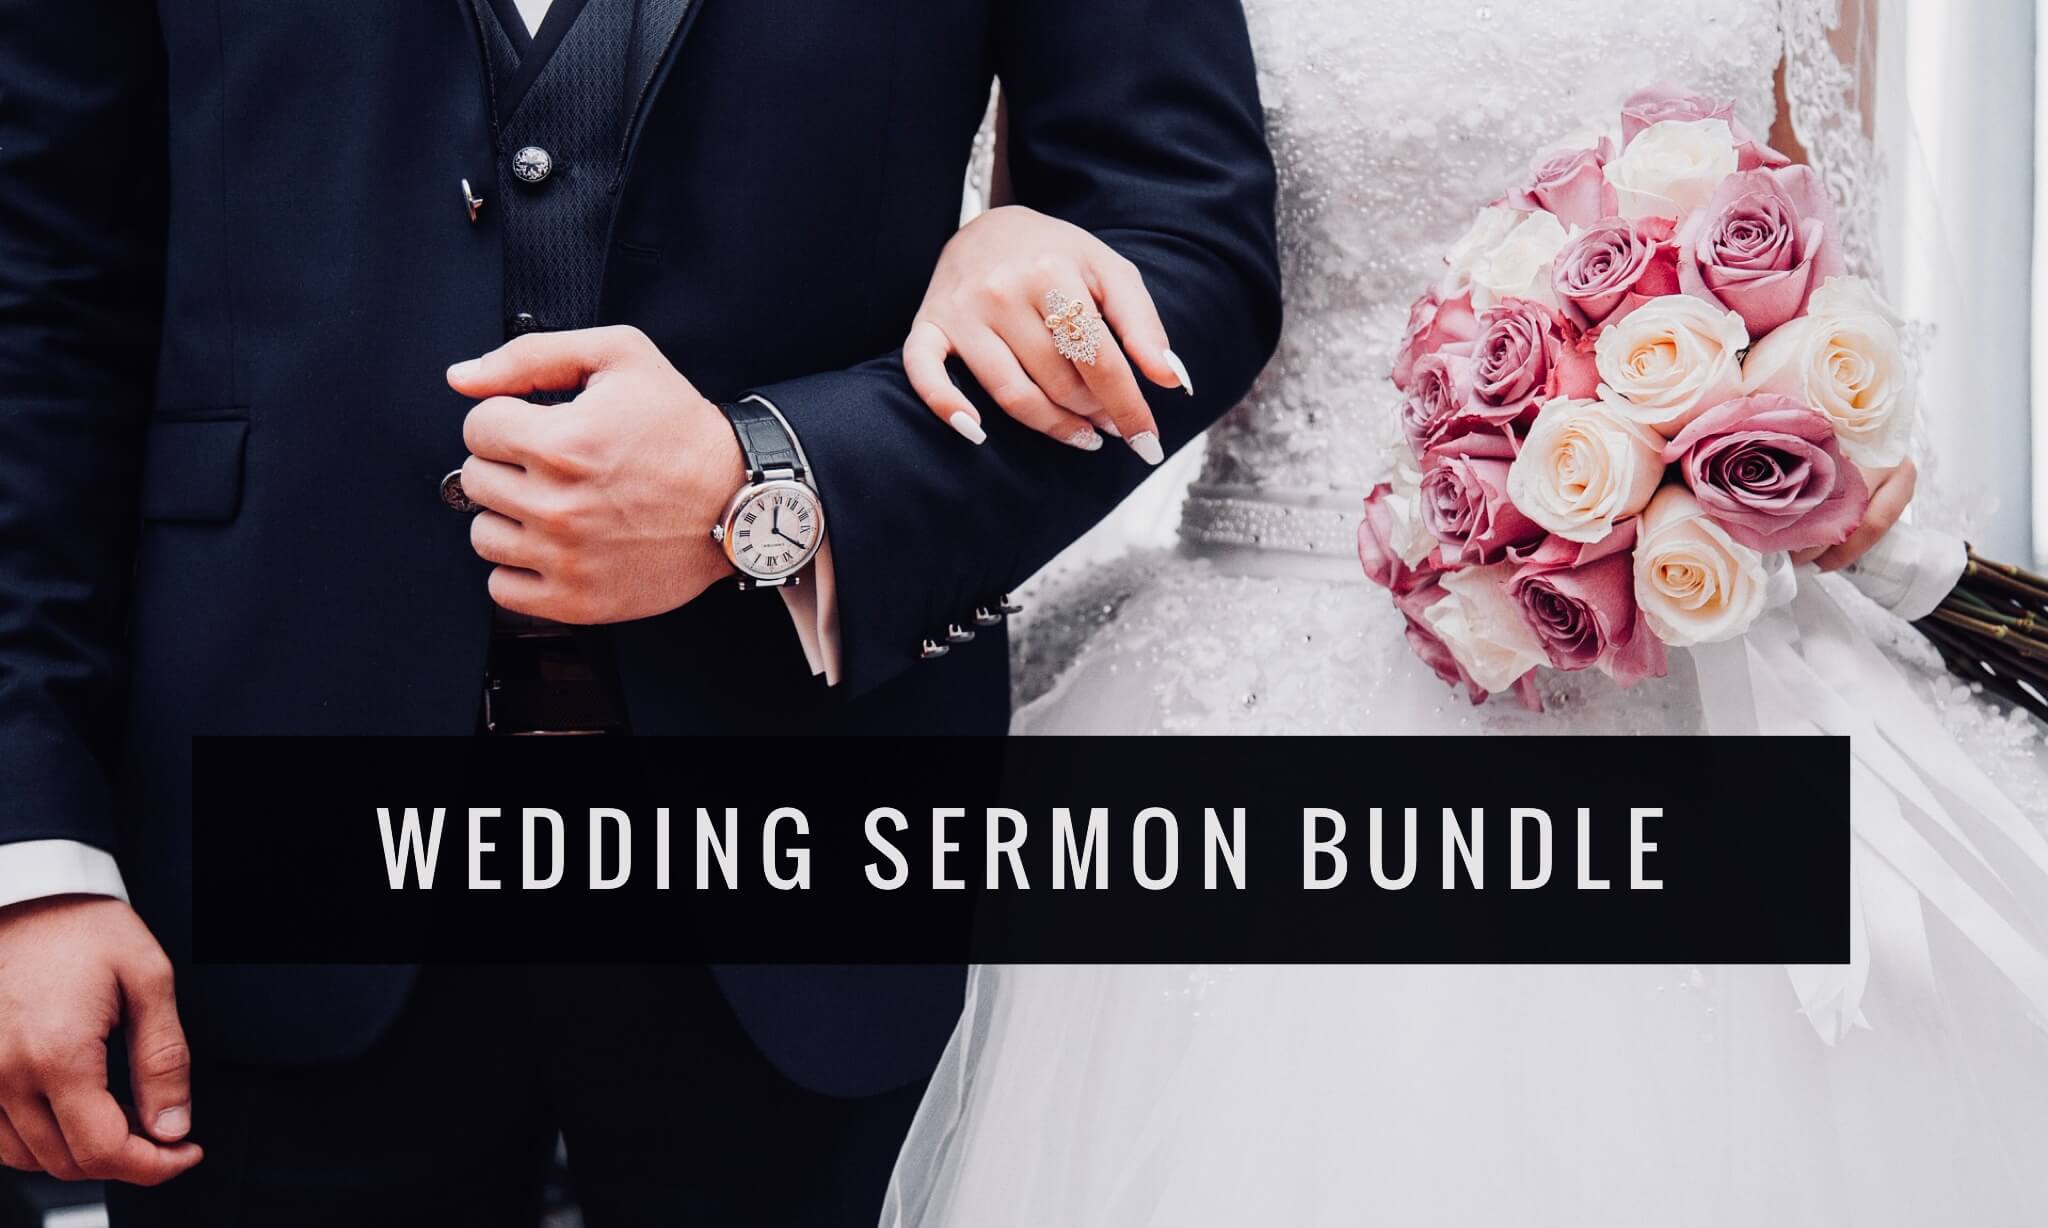 Introducing the Wedding Sermon Bundle